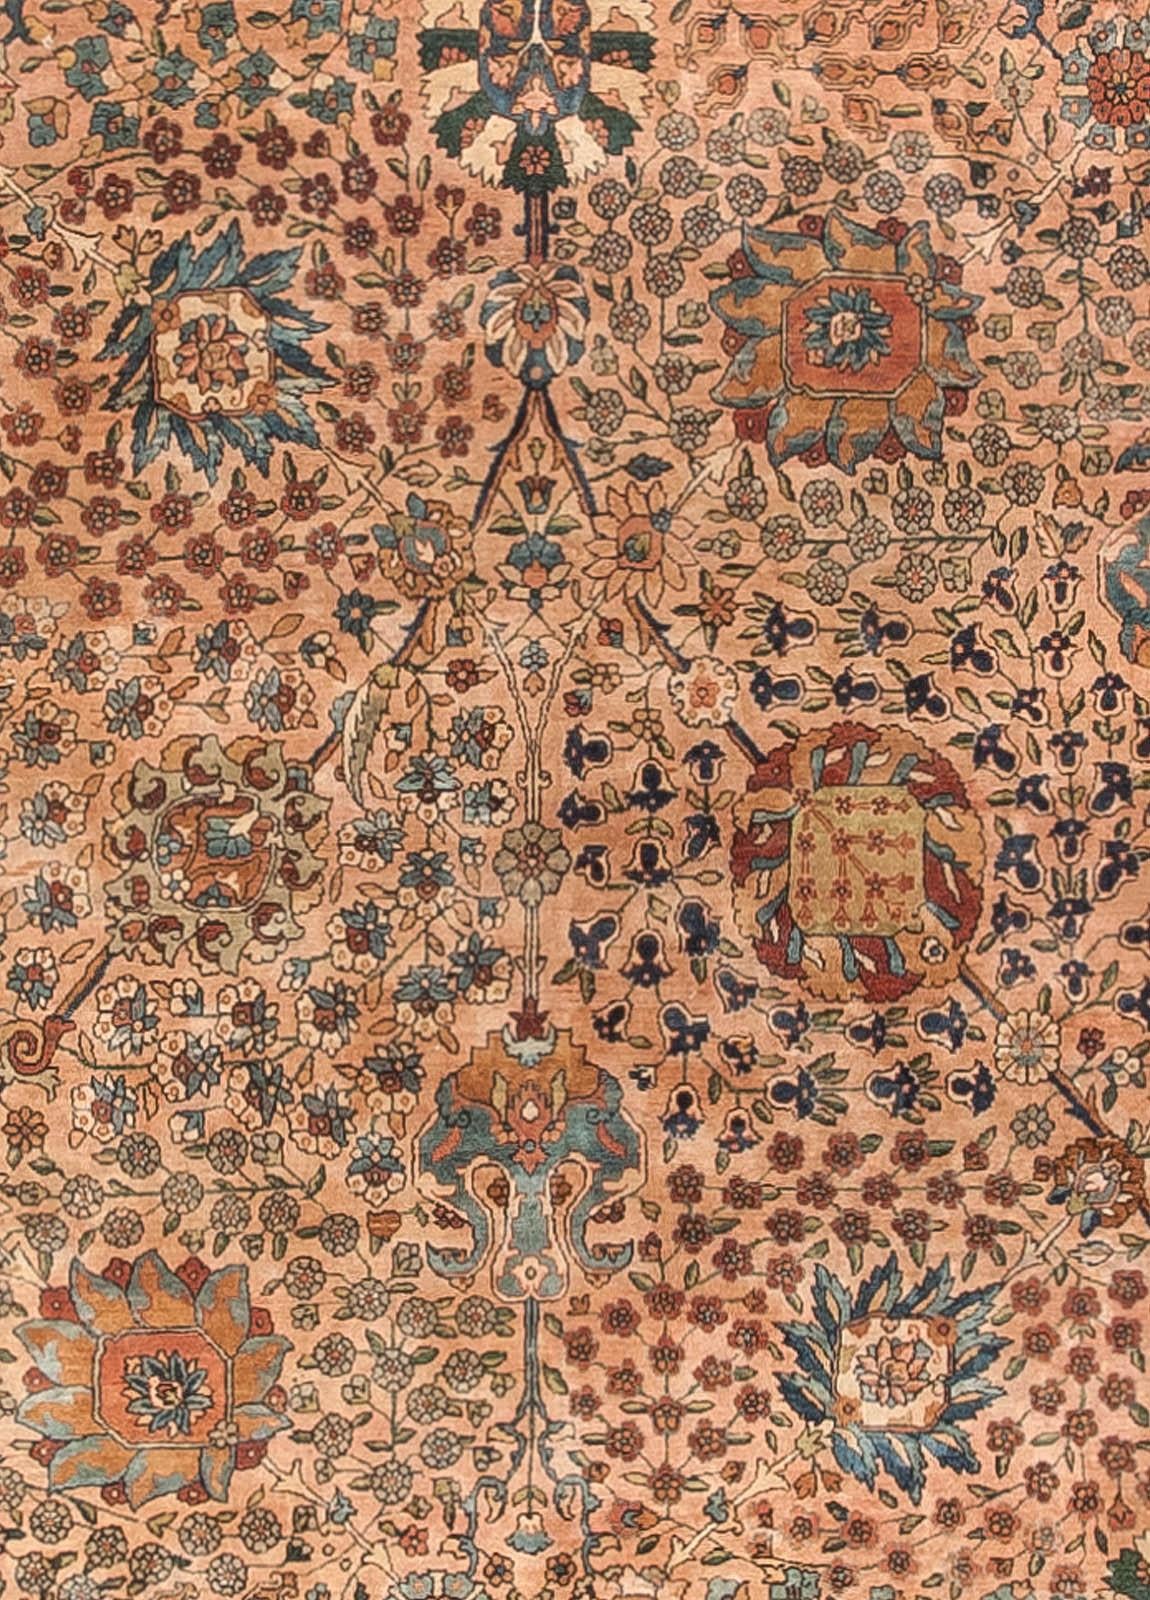 Antique Persian Kirman botanic handmade wool rug.
Size: 12'9